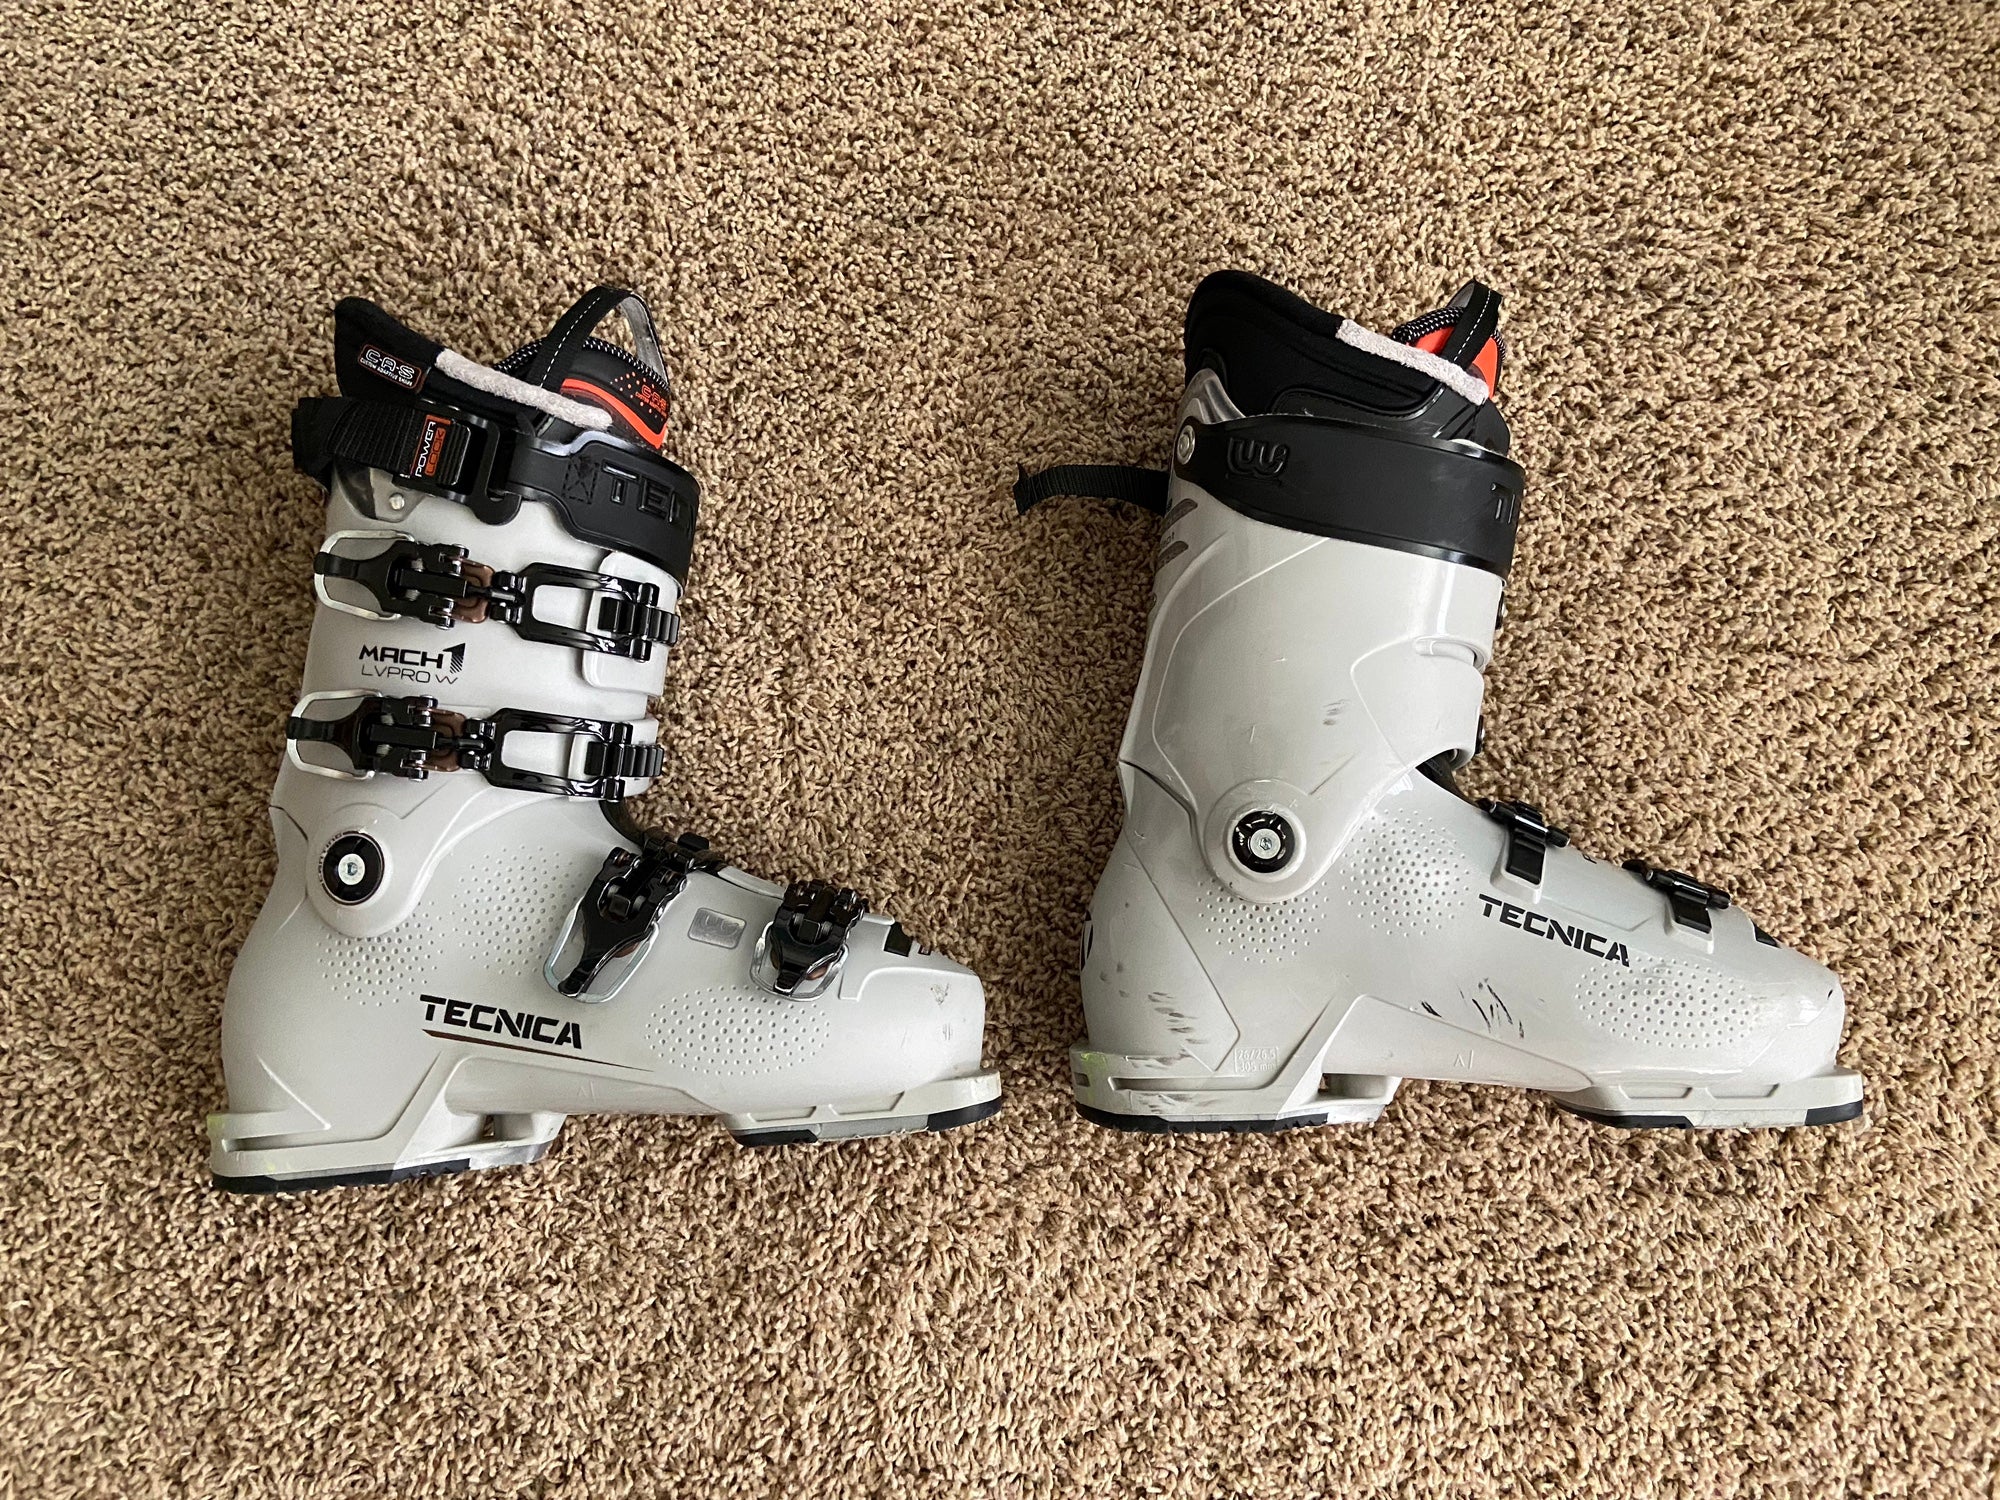 Tecnica Mach1 LV Pro Women's Ski Boots 2021